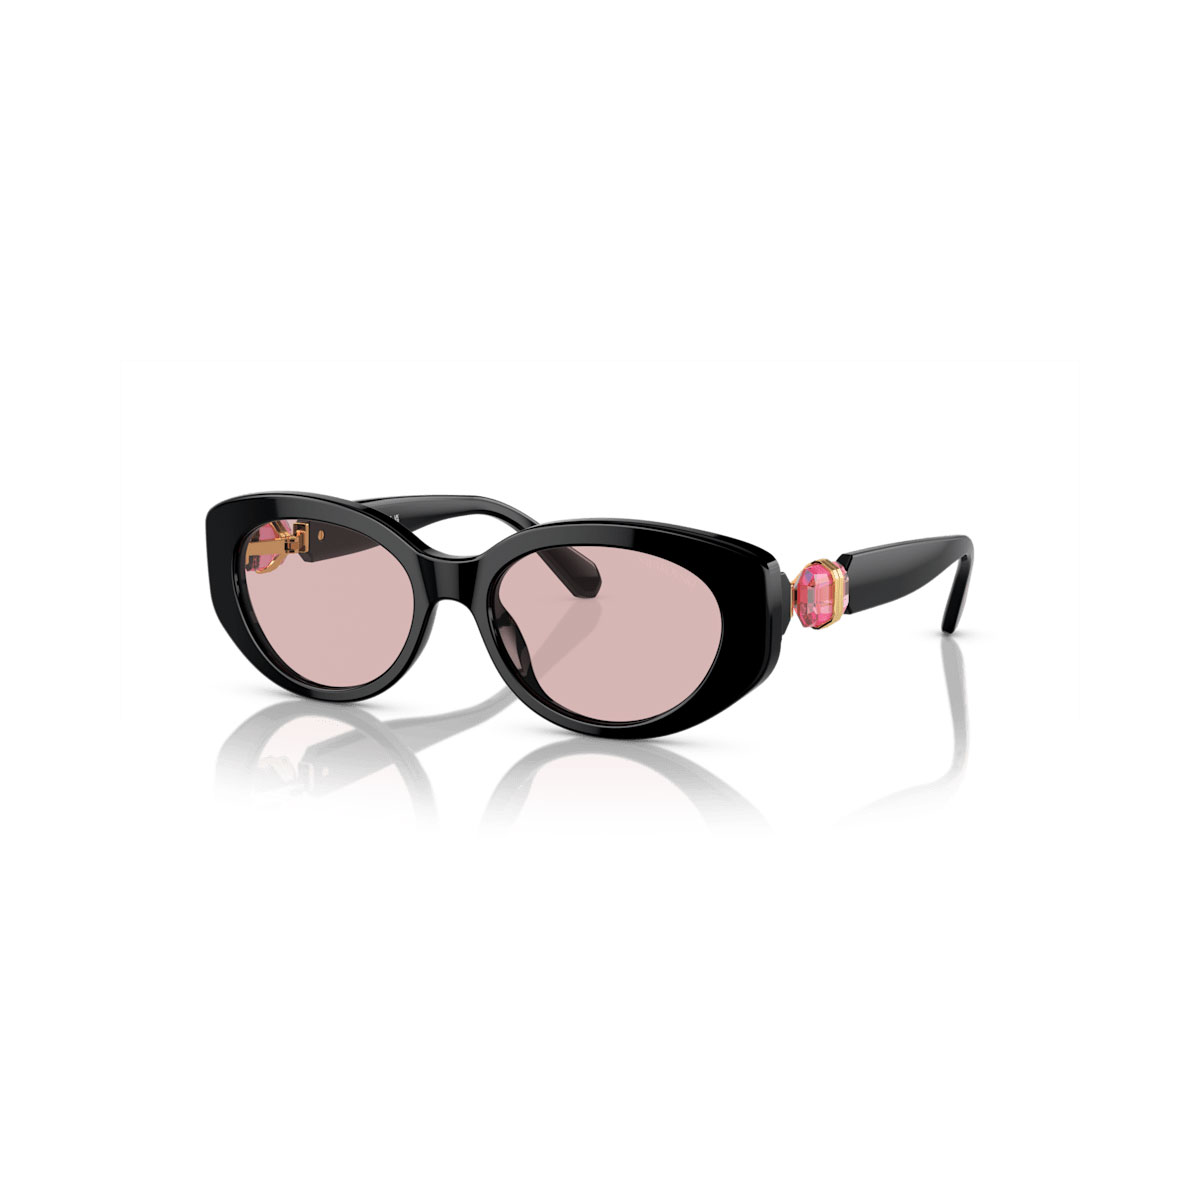 Swarovski Sunglasses, Cat-eye shape, Multicolored